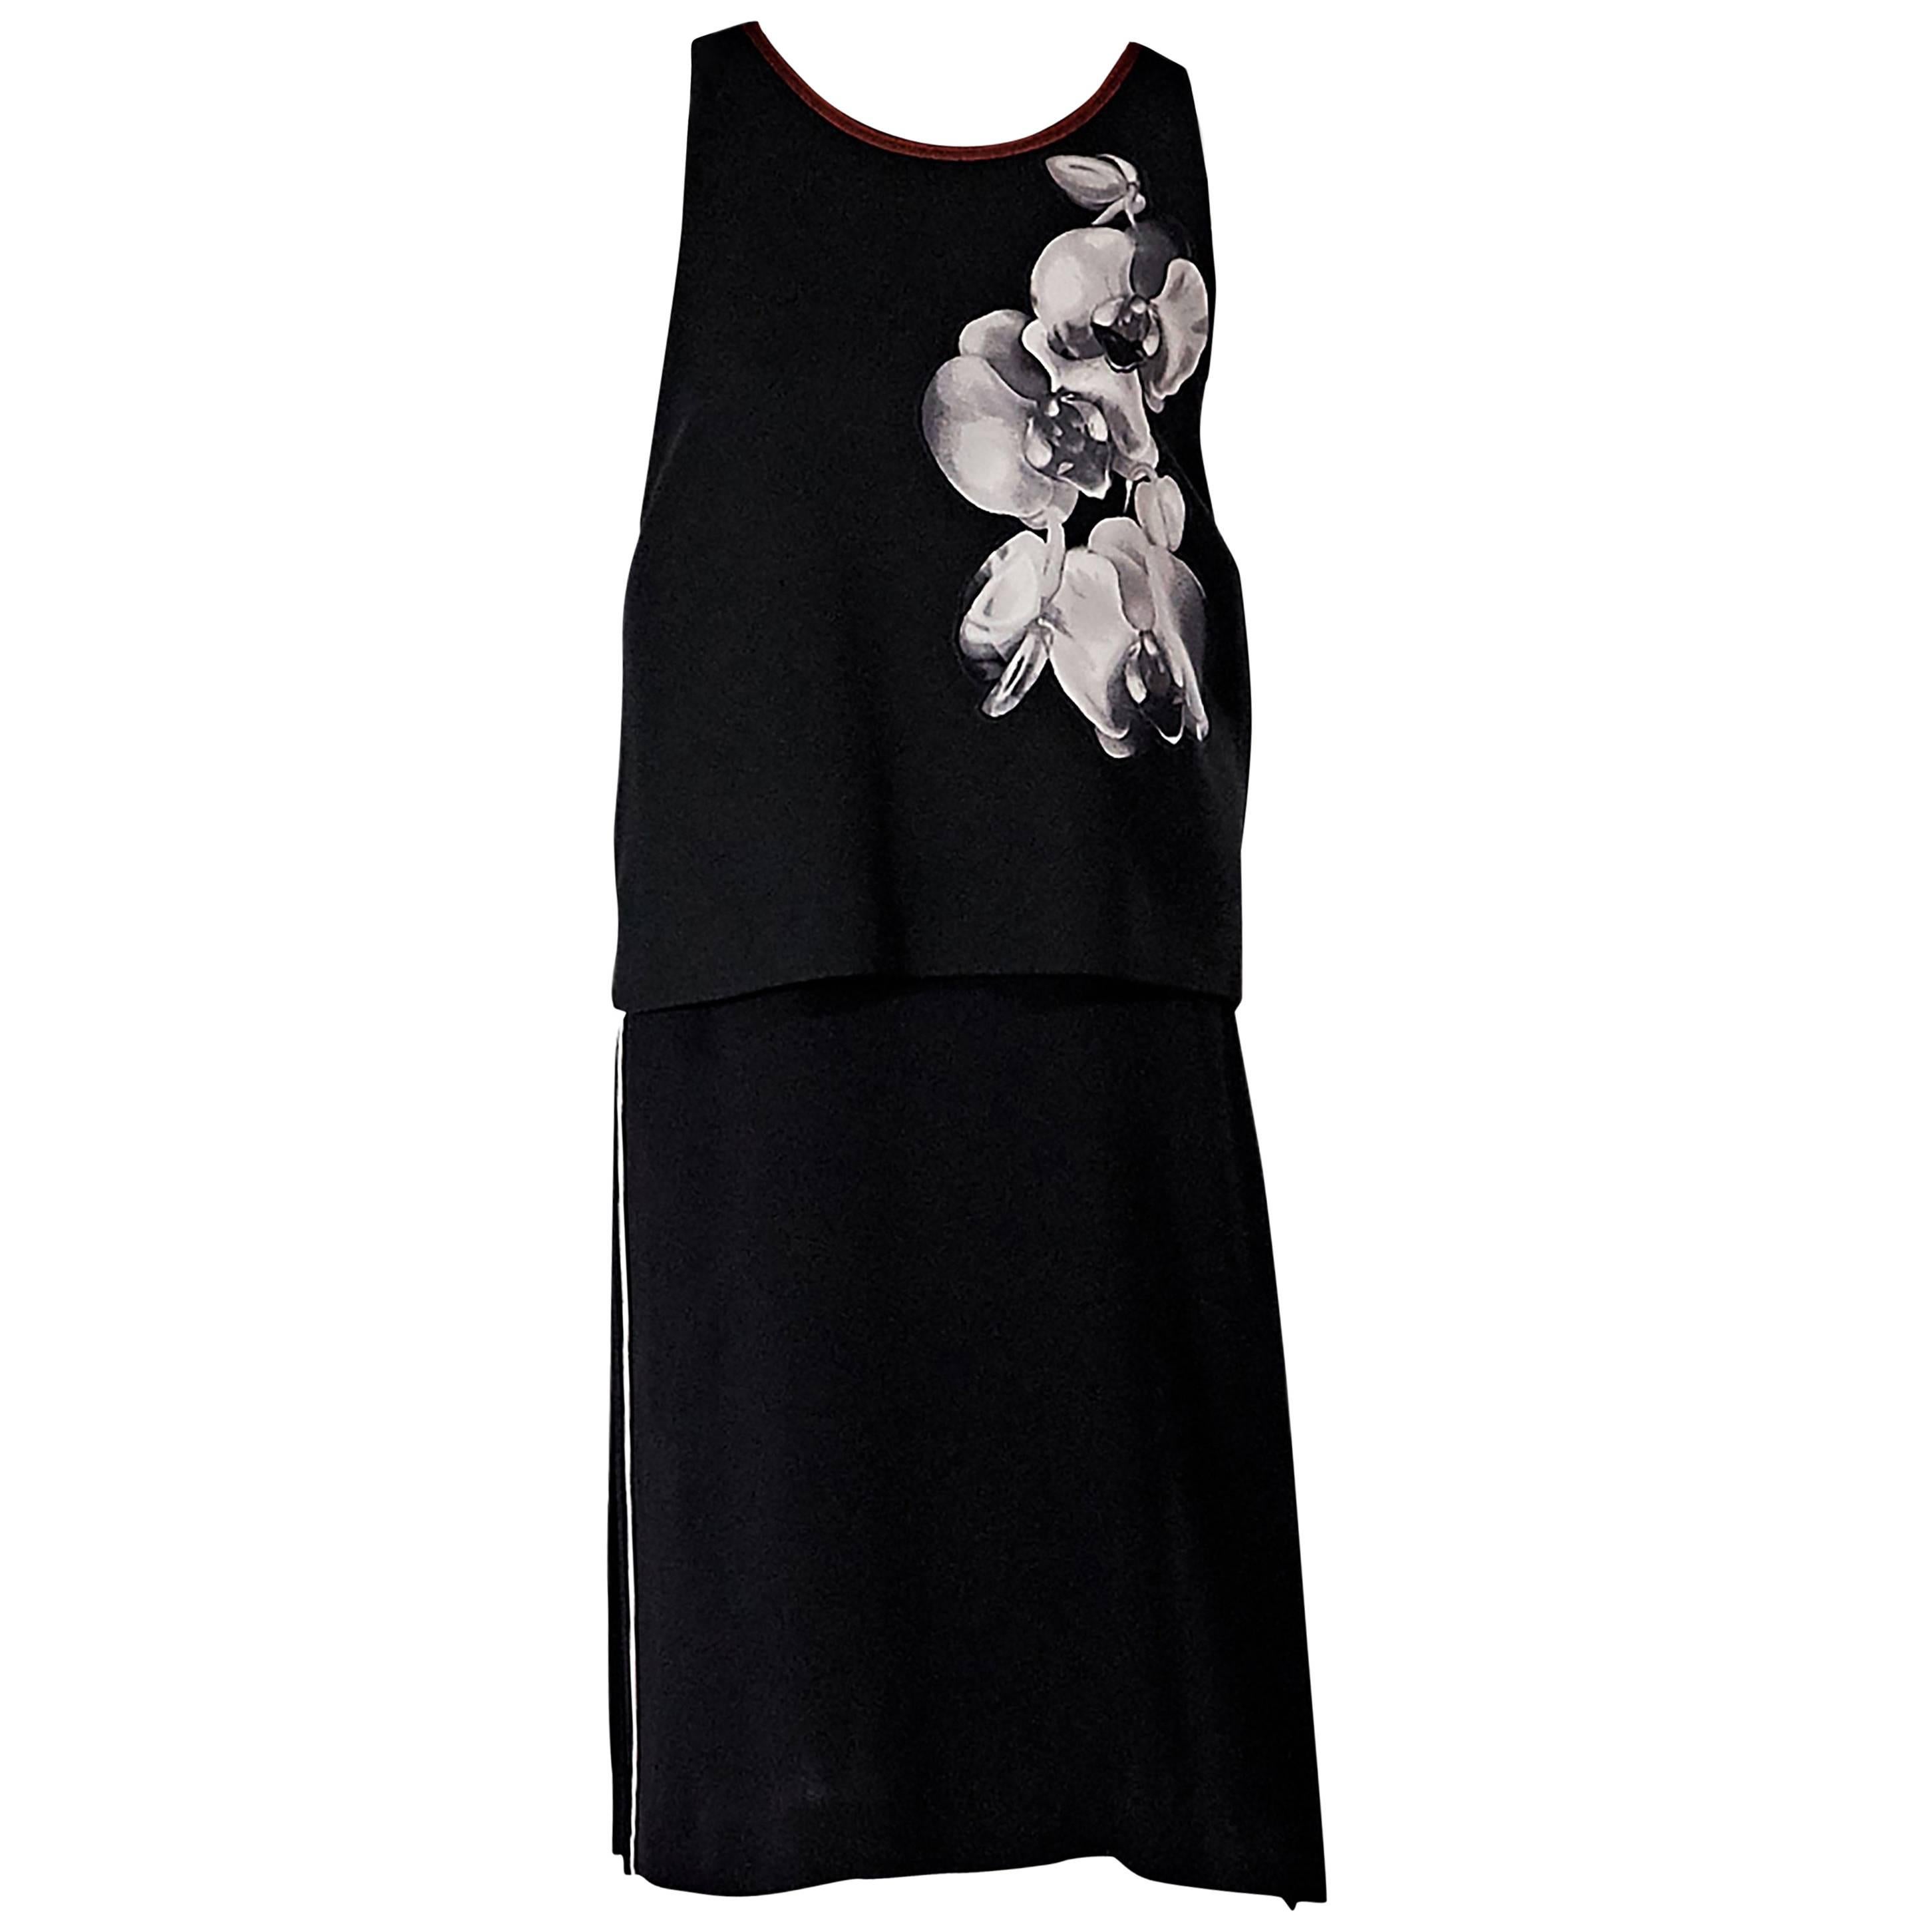 Black Fendi Floral-Printed Overlay Dress